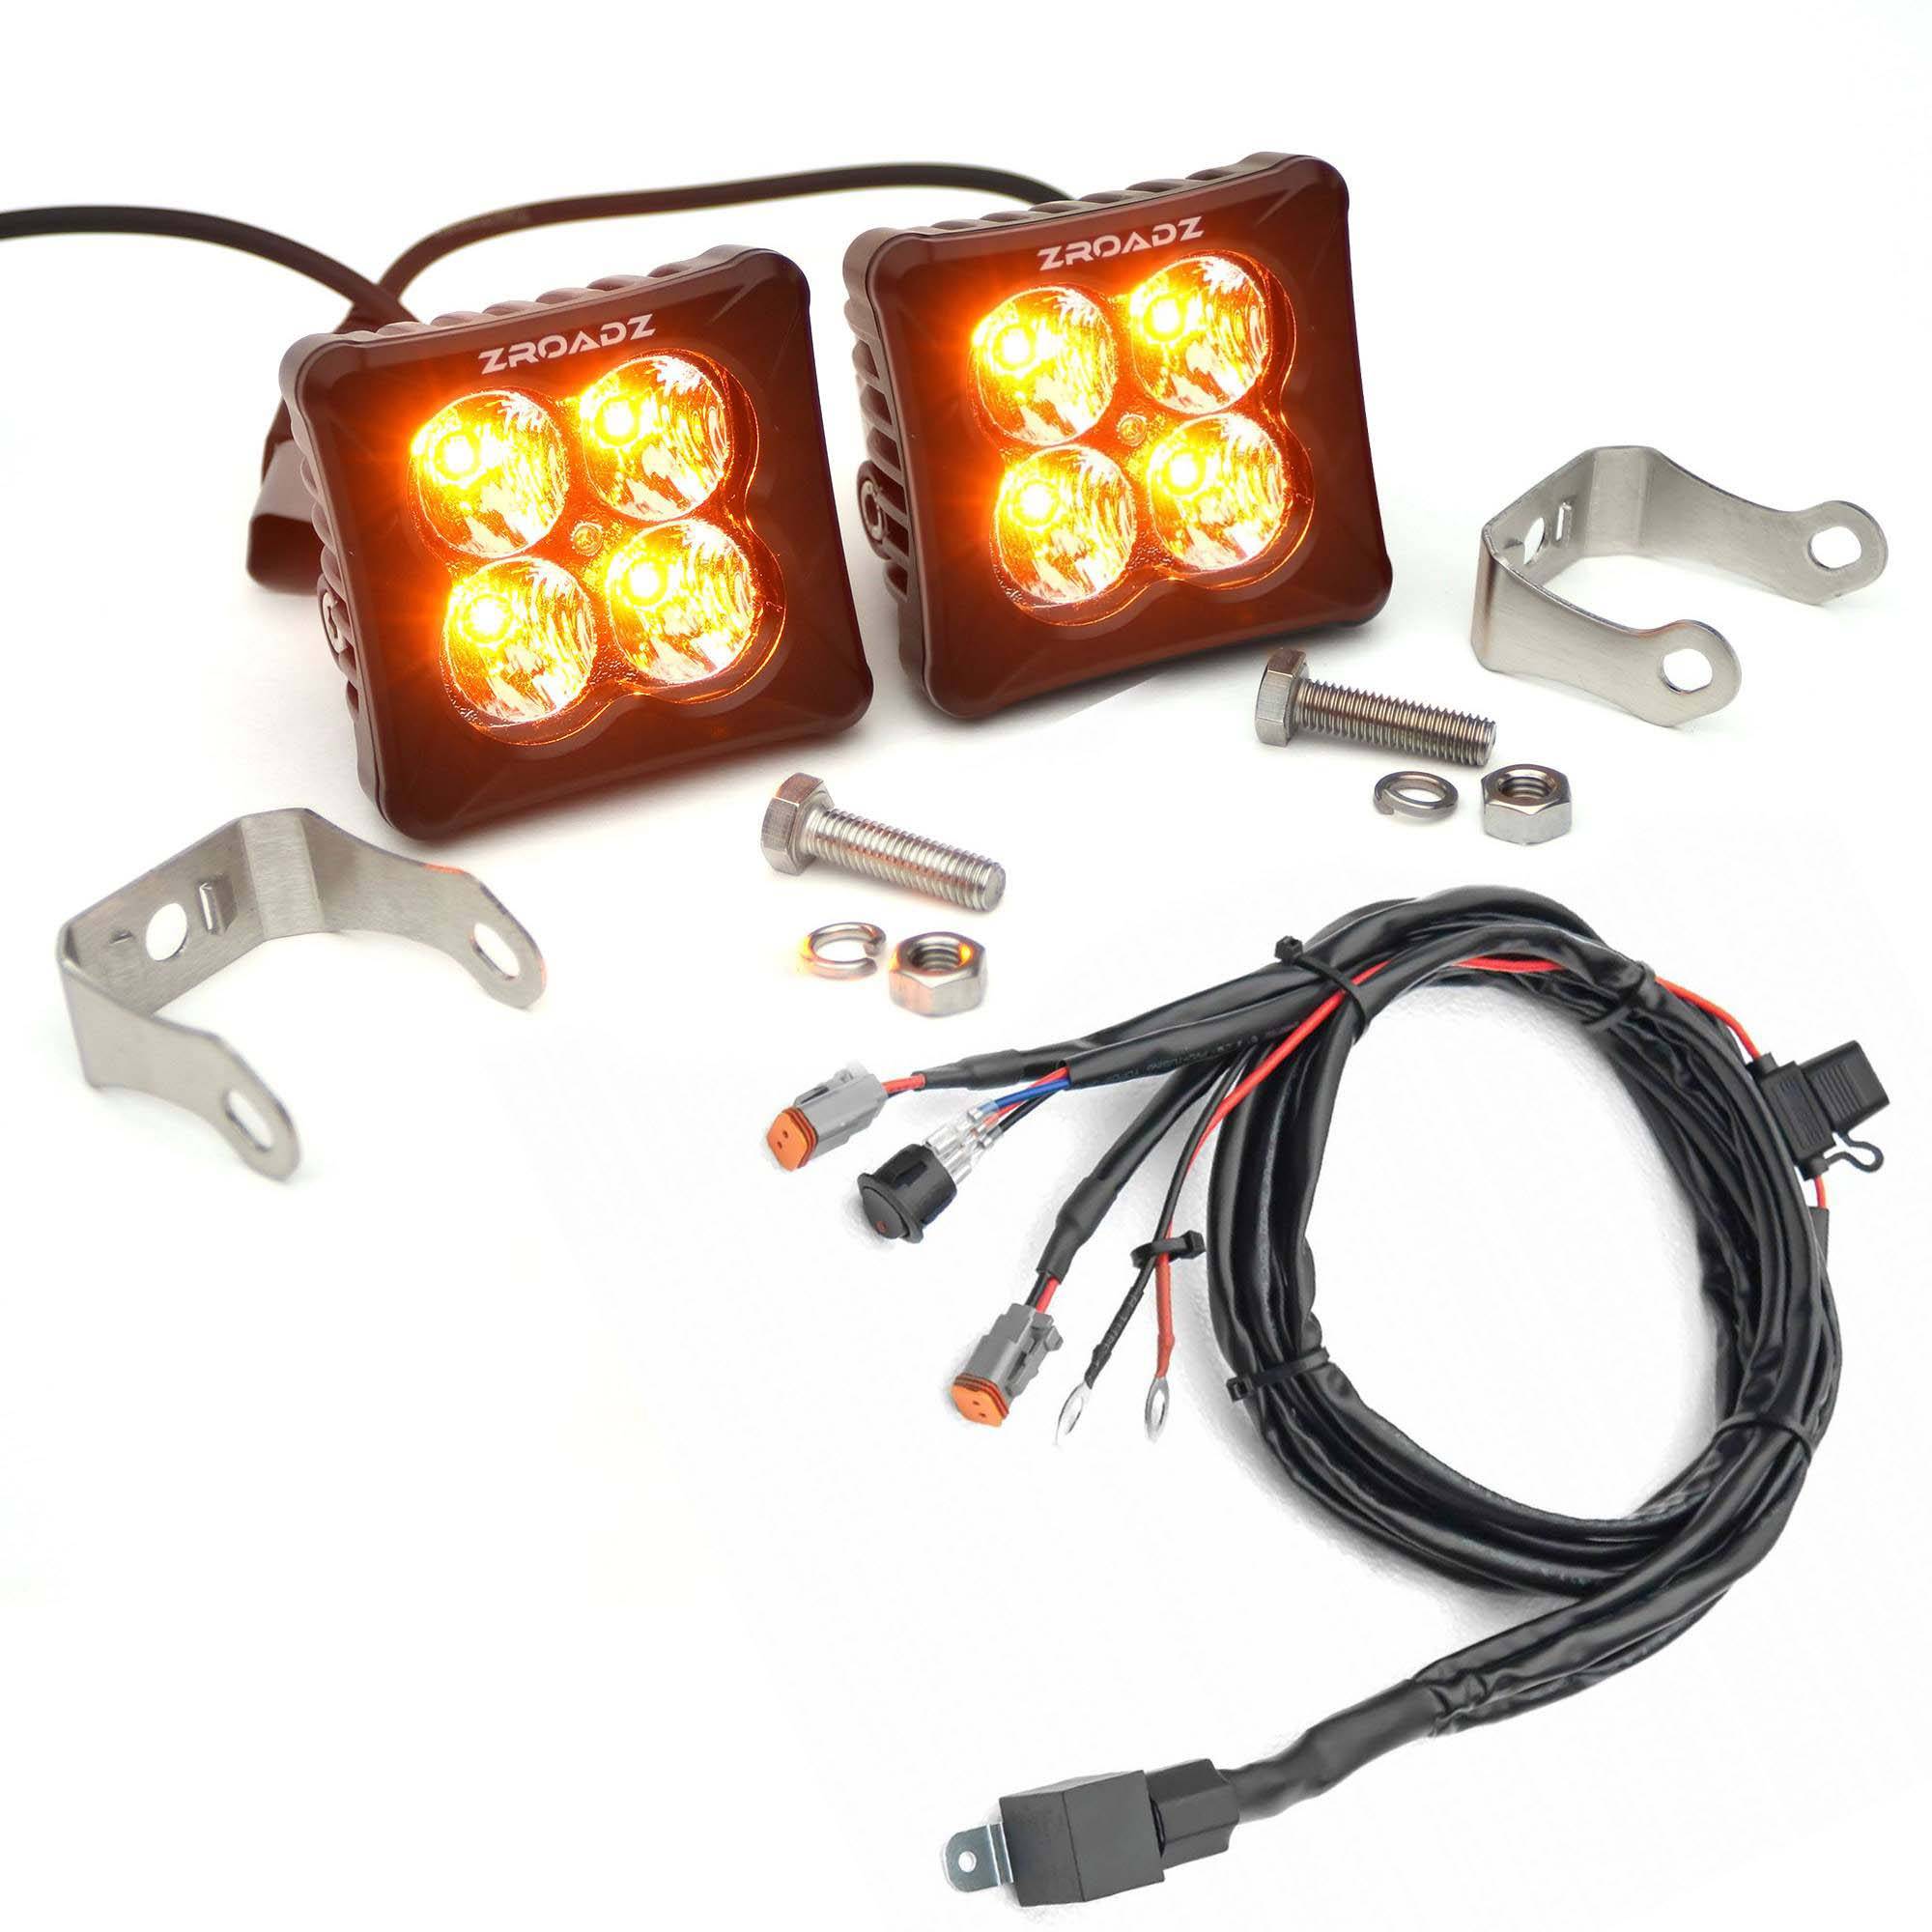 ZROADZ OFF ROAD PRODUCTS - 3 inch ZROADZ LED Light Pod Kit, G2 Series, Amber, Flood Beam, 2 Piece Kit With Wiring Harness - Part # Z30BC12W-D3A-K